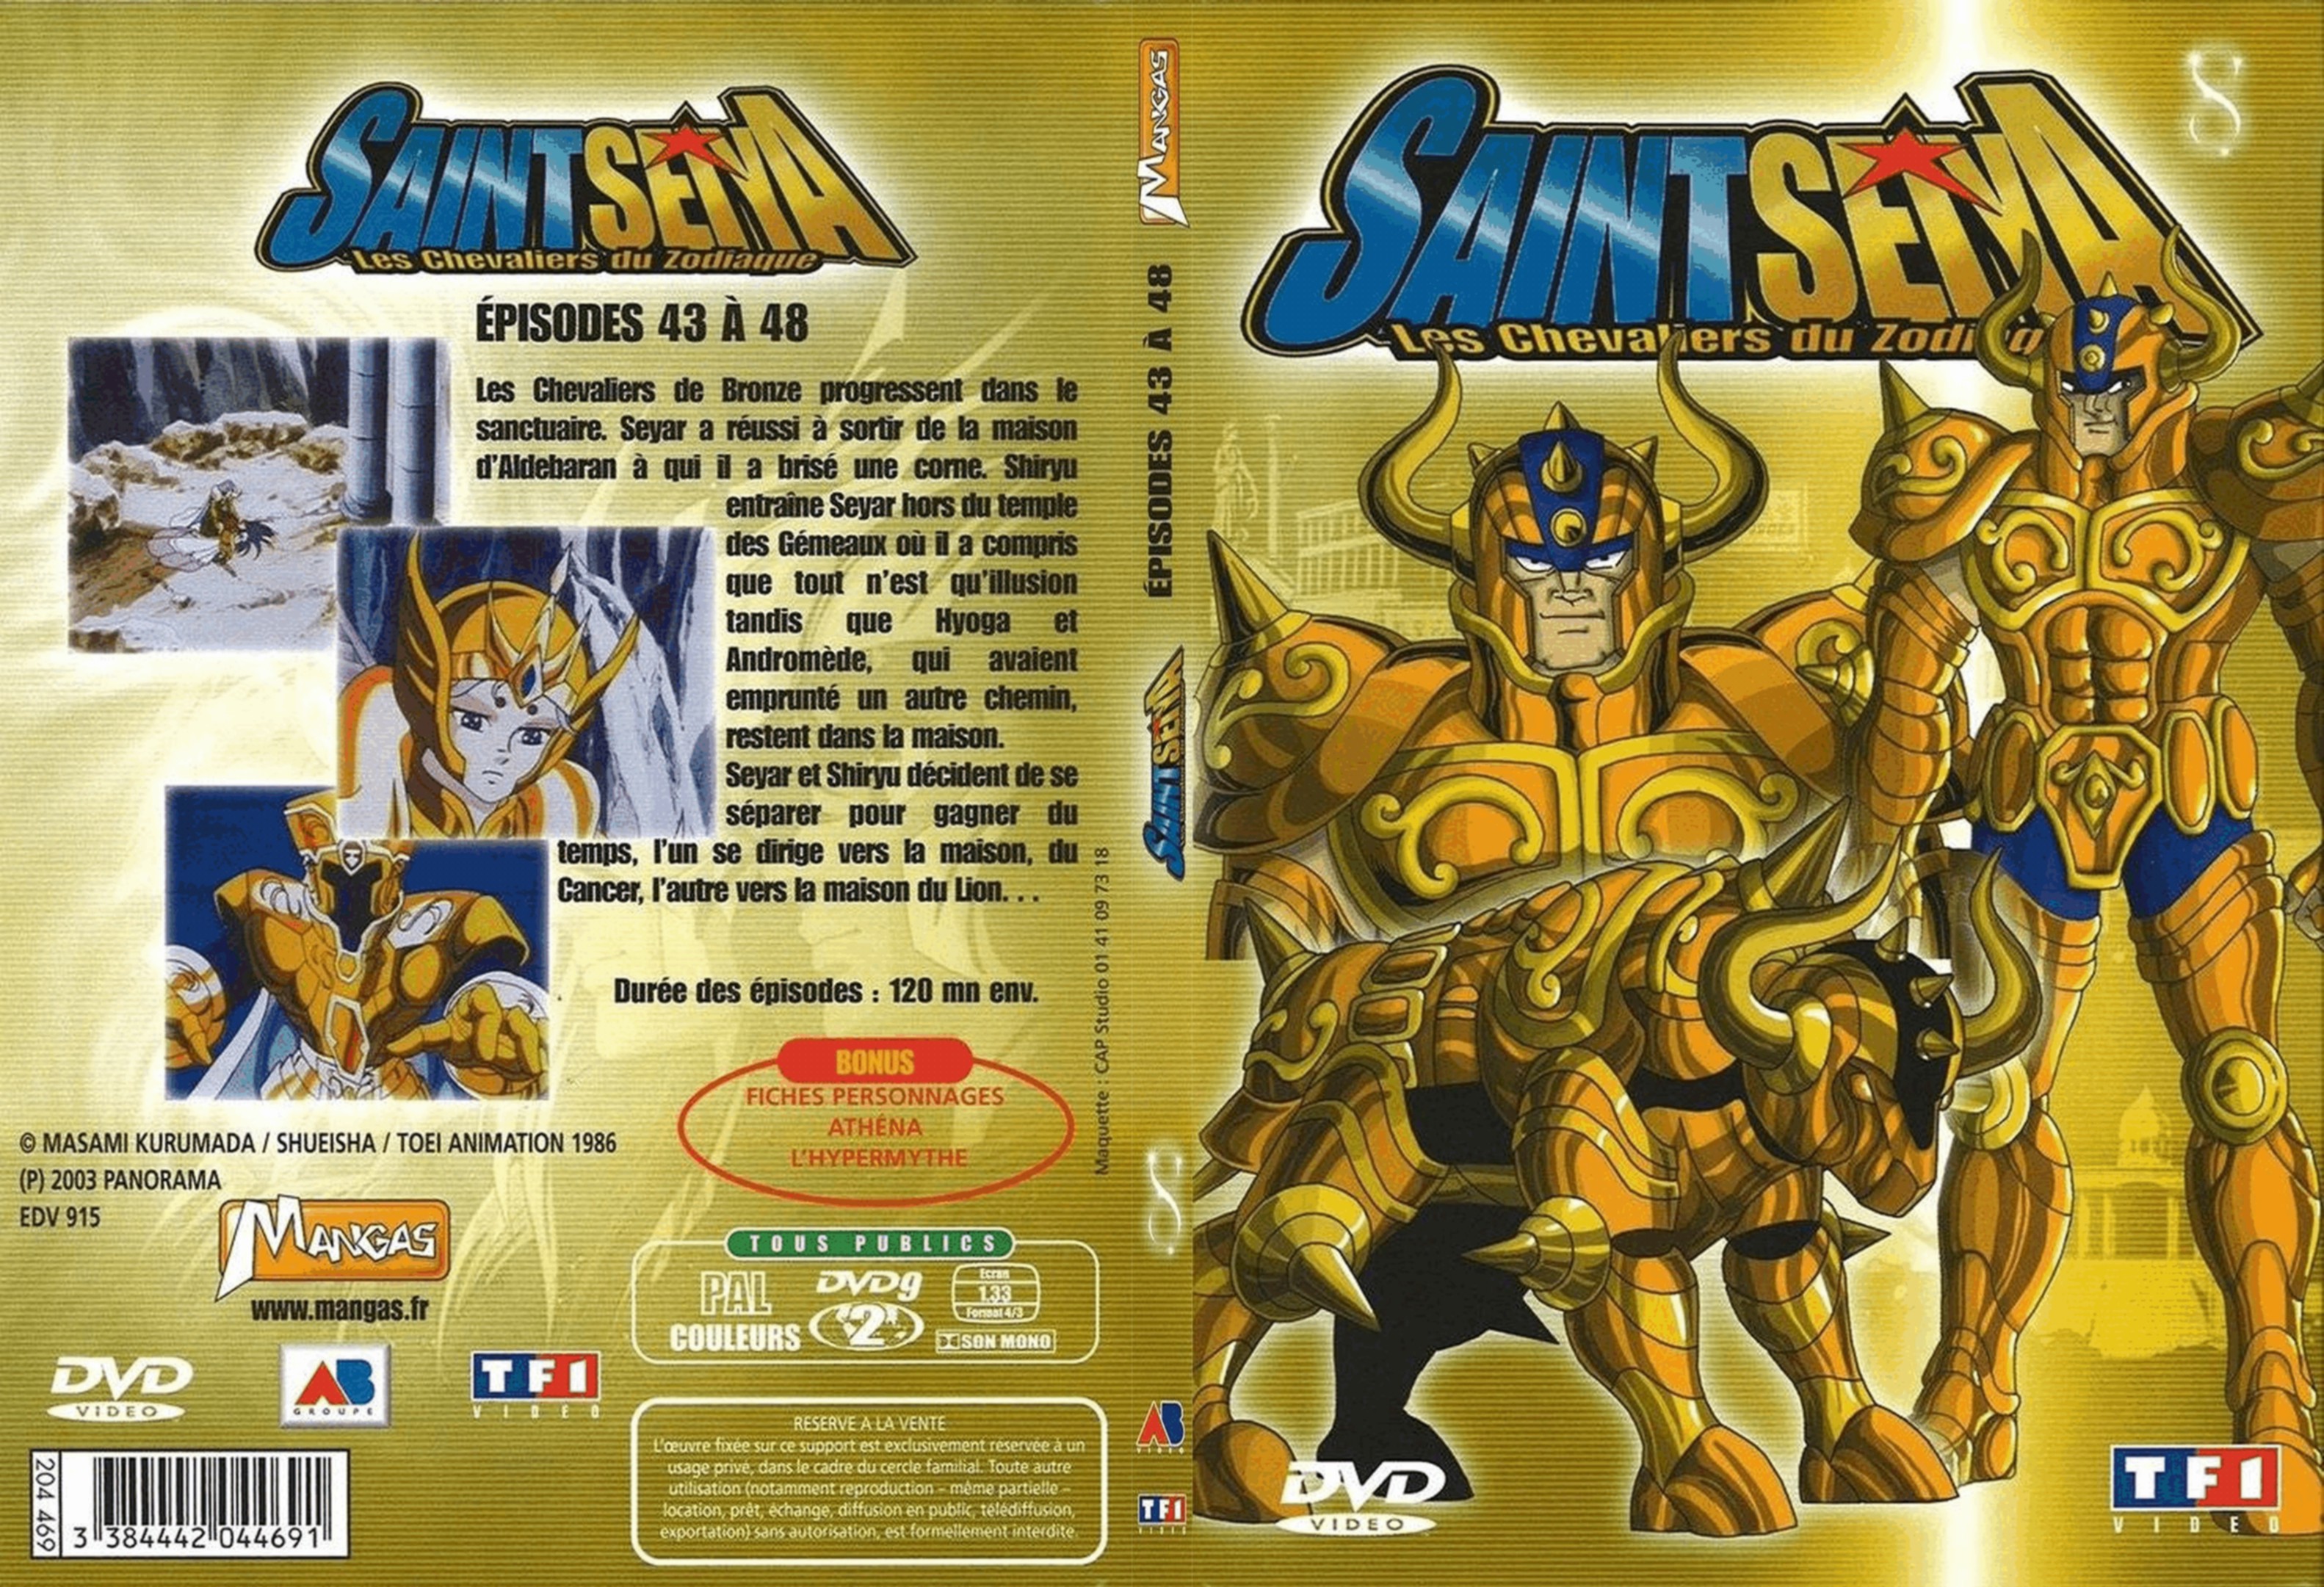 Jaquette DVD Saint Seiya vol 08 - SLIM